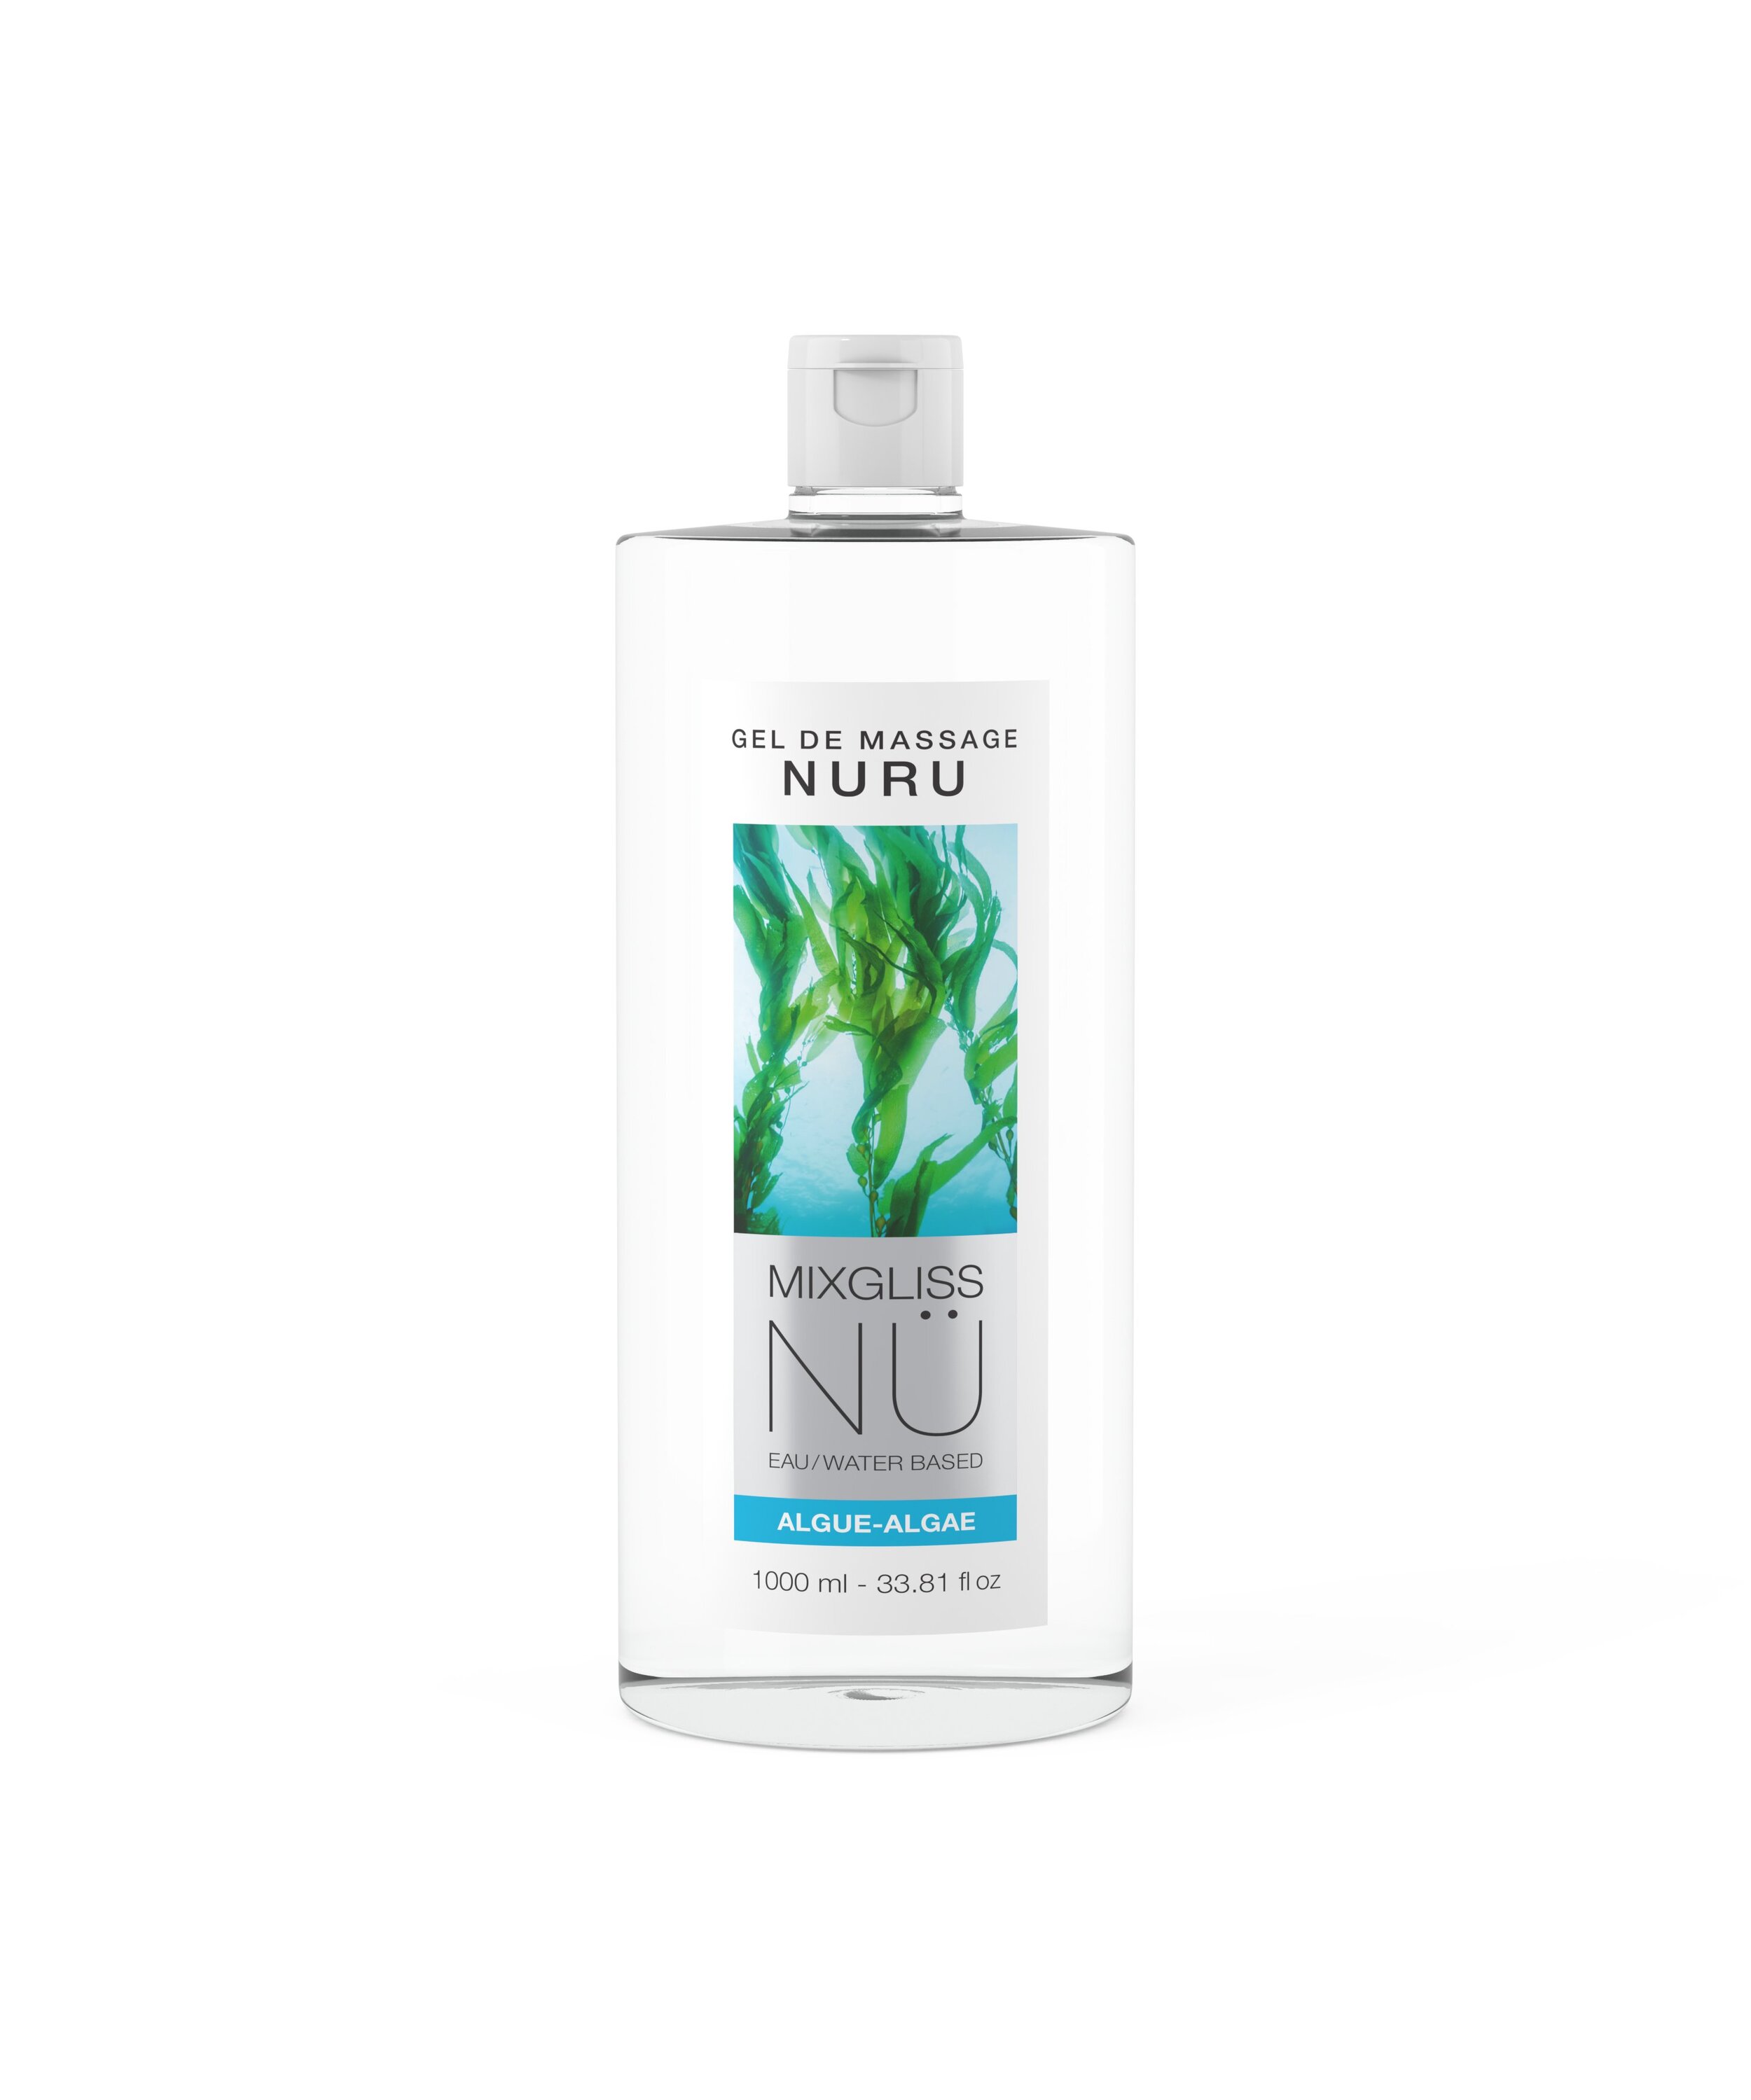 Nuru Mixgliss NÜ Algae by Strap-on-Me (online store)